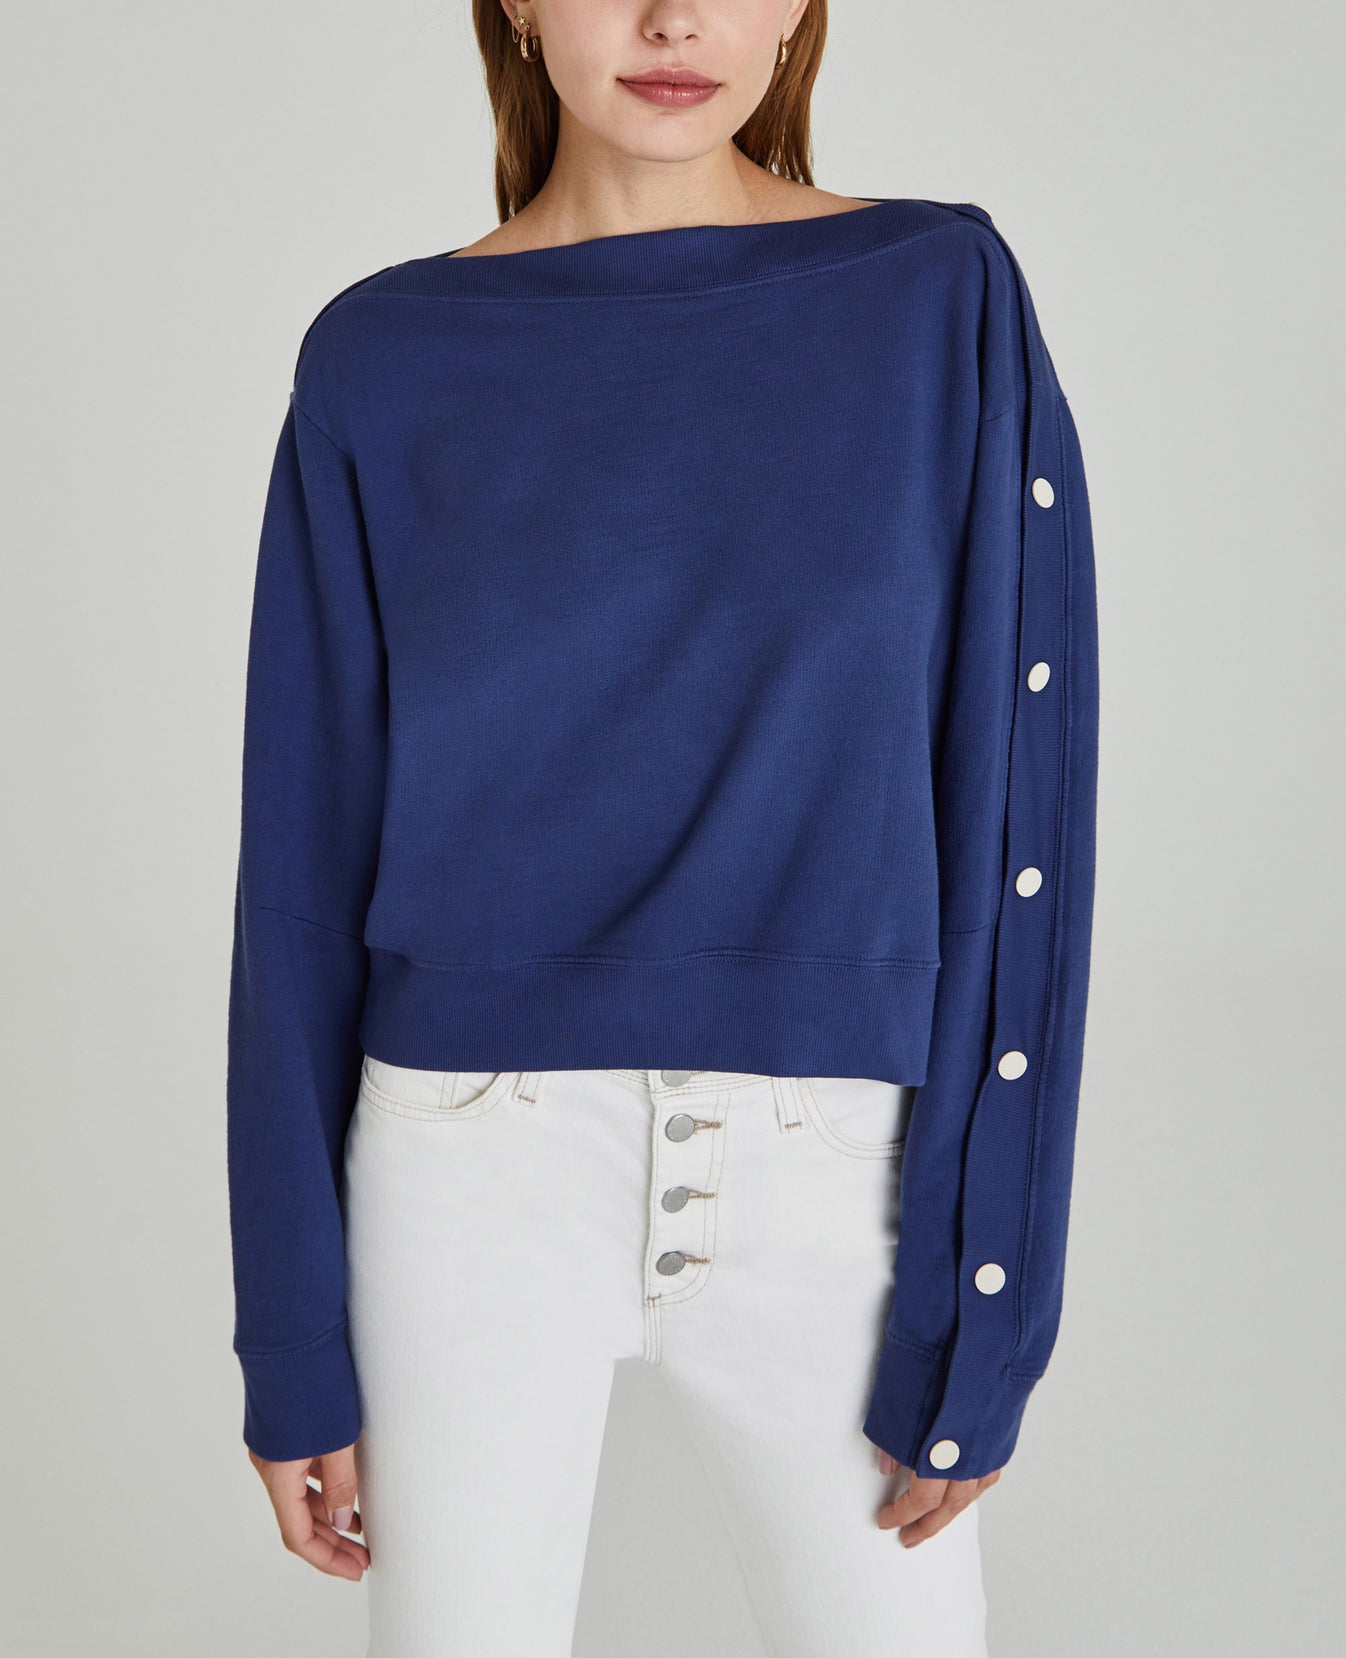 Cyra Sweatshirt Bright Indigo Snap Button Sweatshirt Women Tops Photo 1